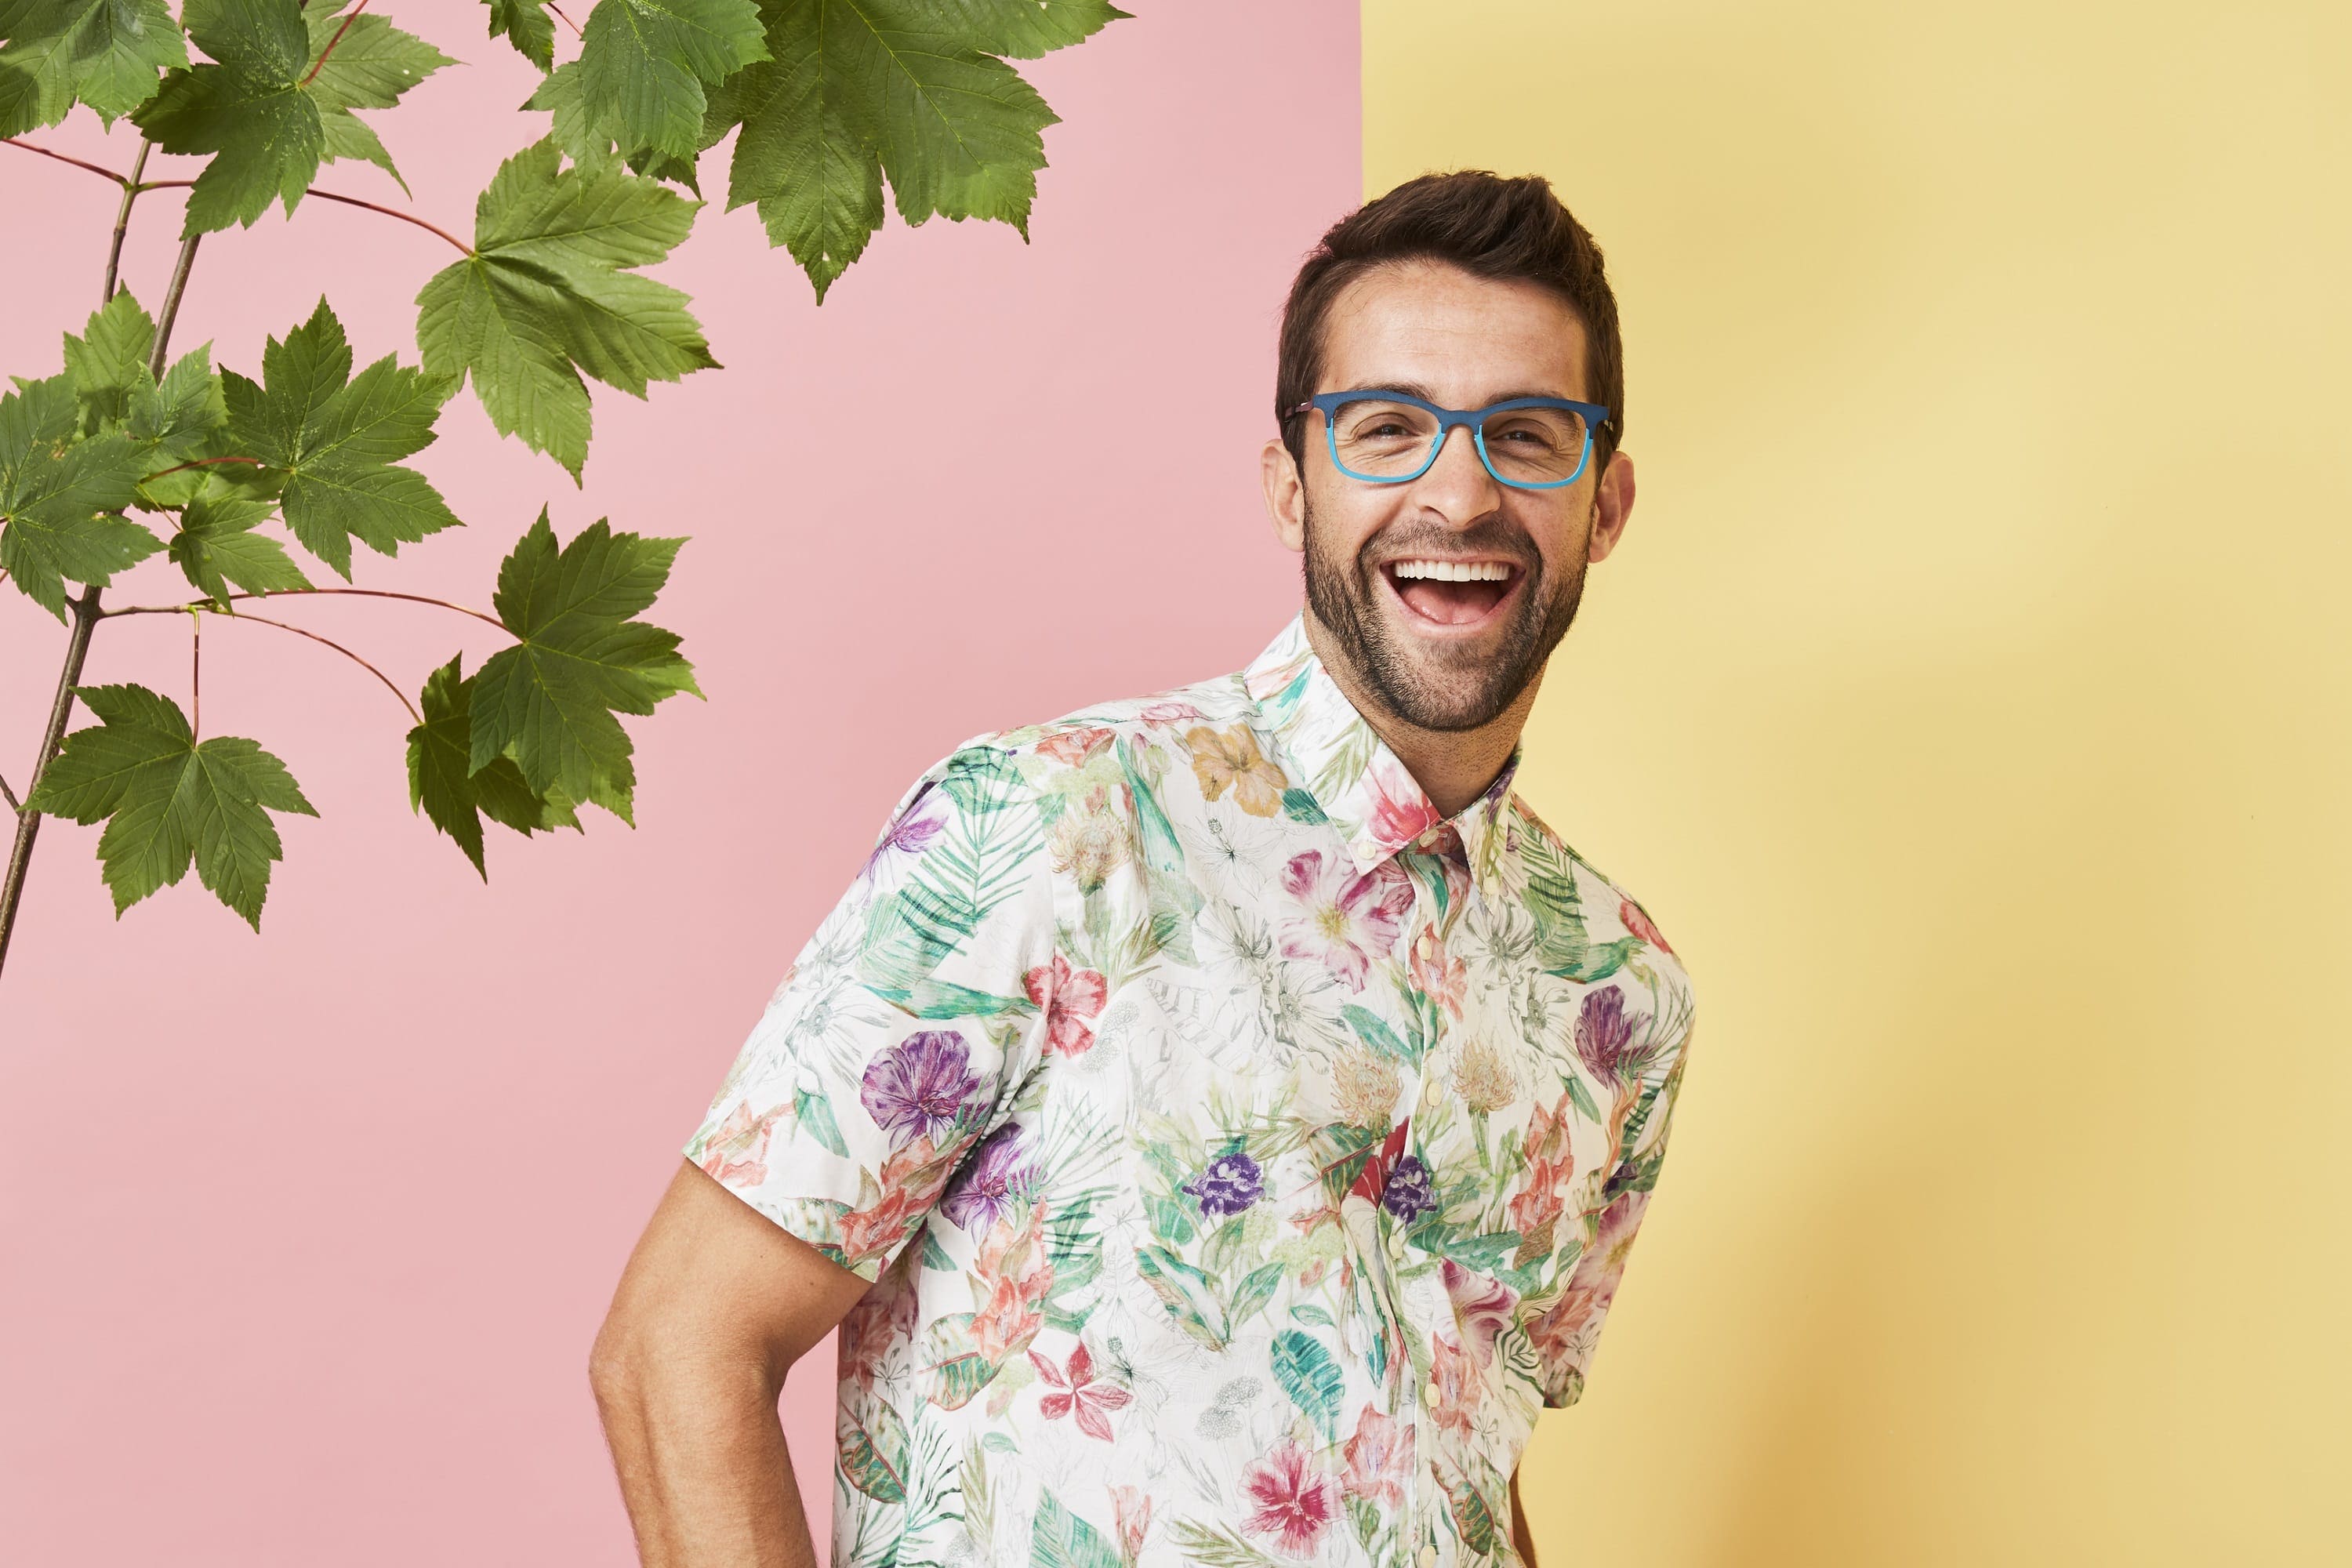 floral-shirt-man.jpg